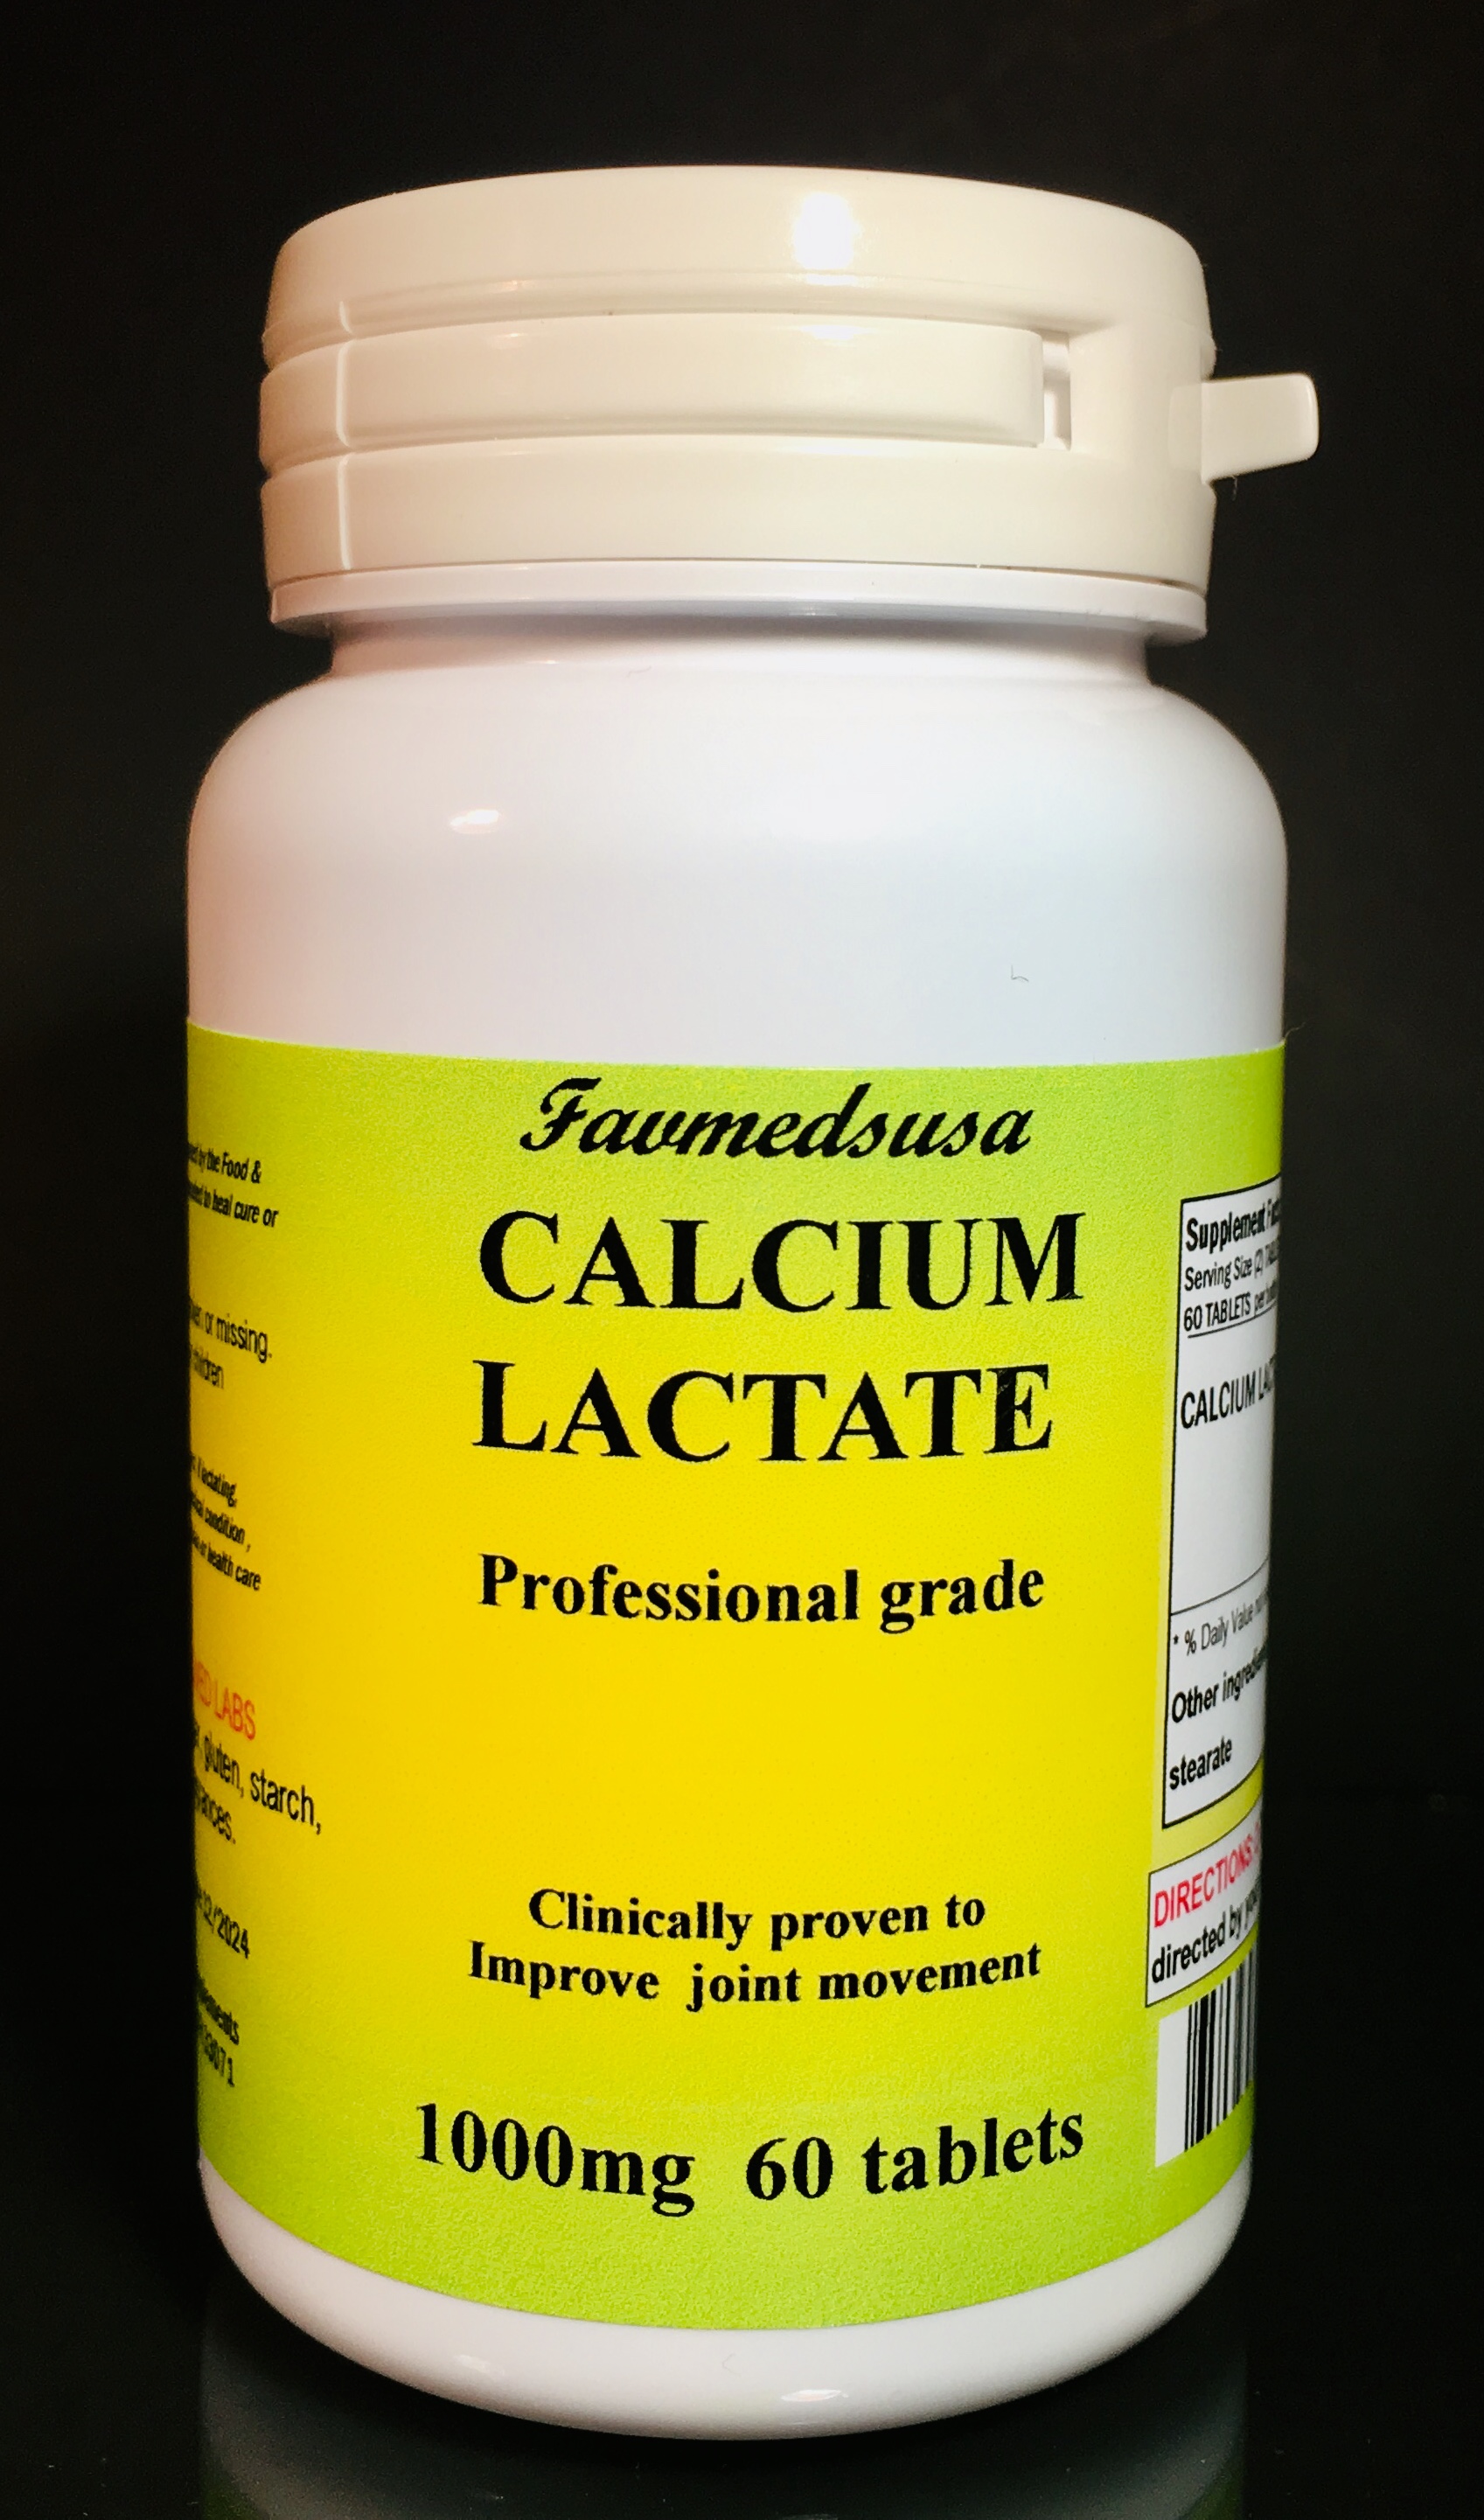 Calcium Lactate 1000mg antacid - 60 tablets